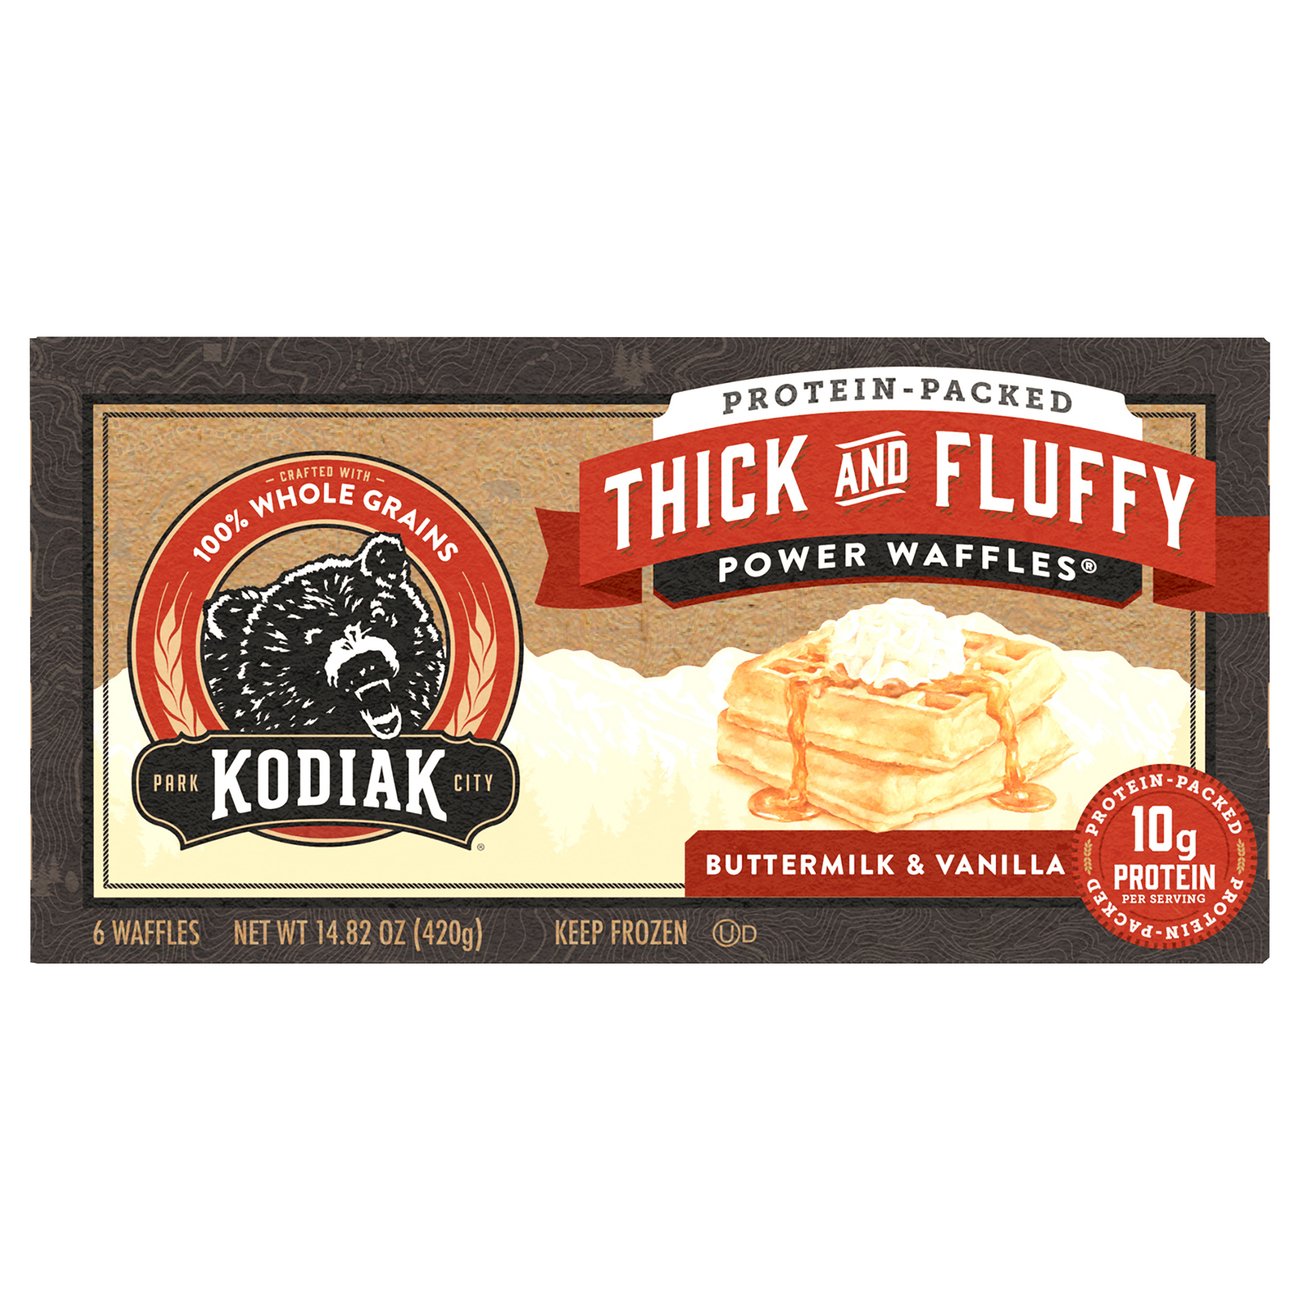 Kodiak 10g Protein Thick & Fluffy Power Waffles - Buttermilk & Vanilla ...